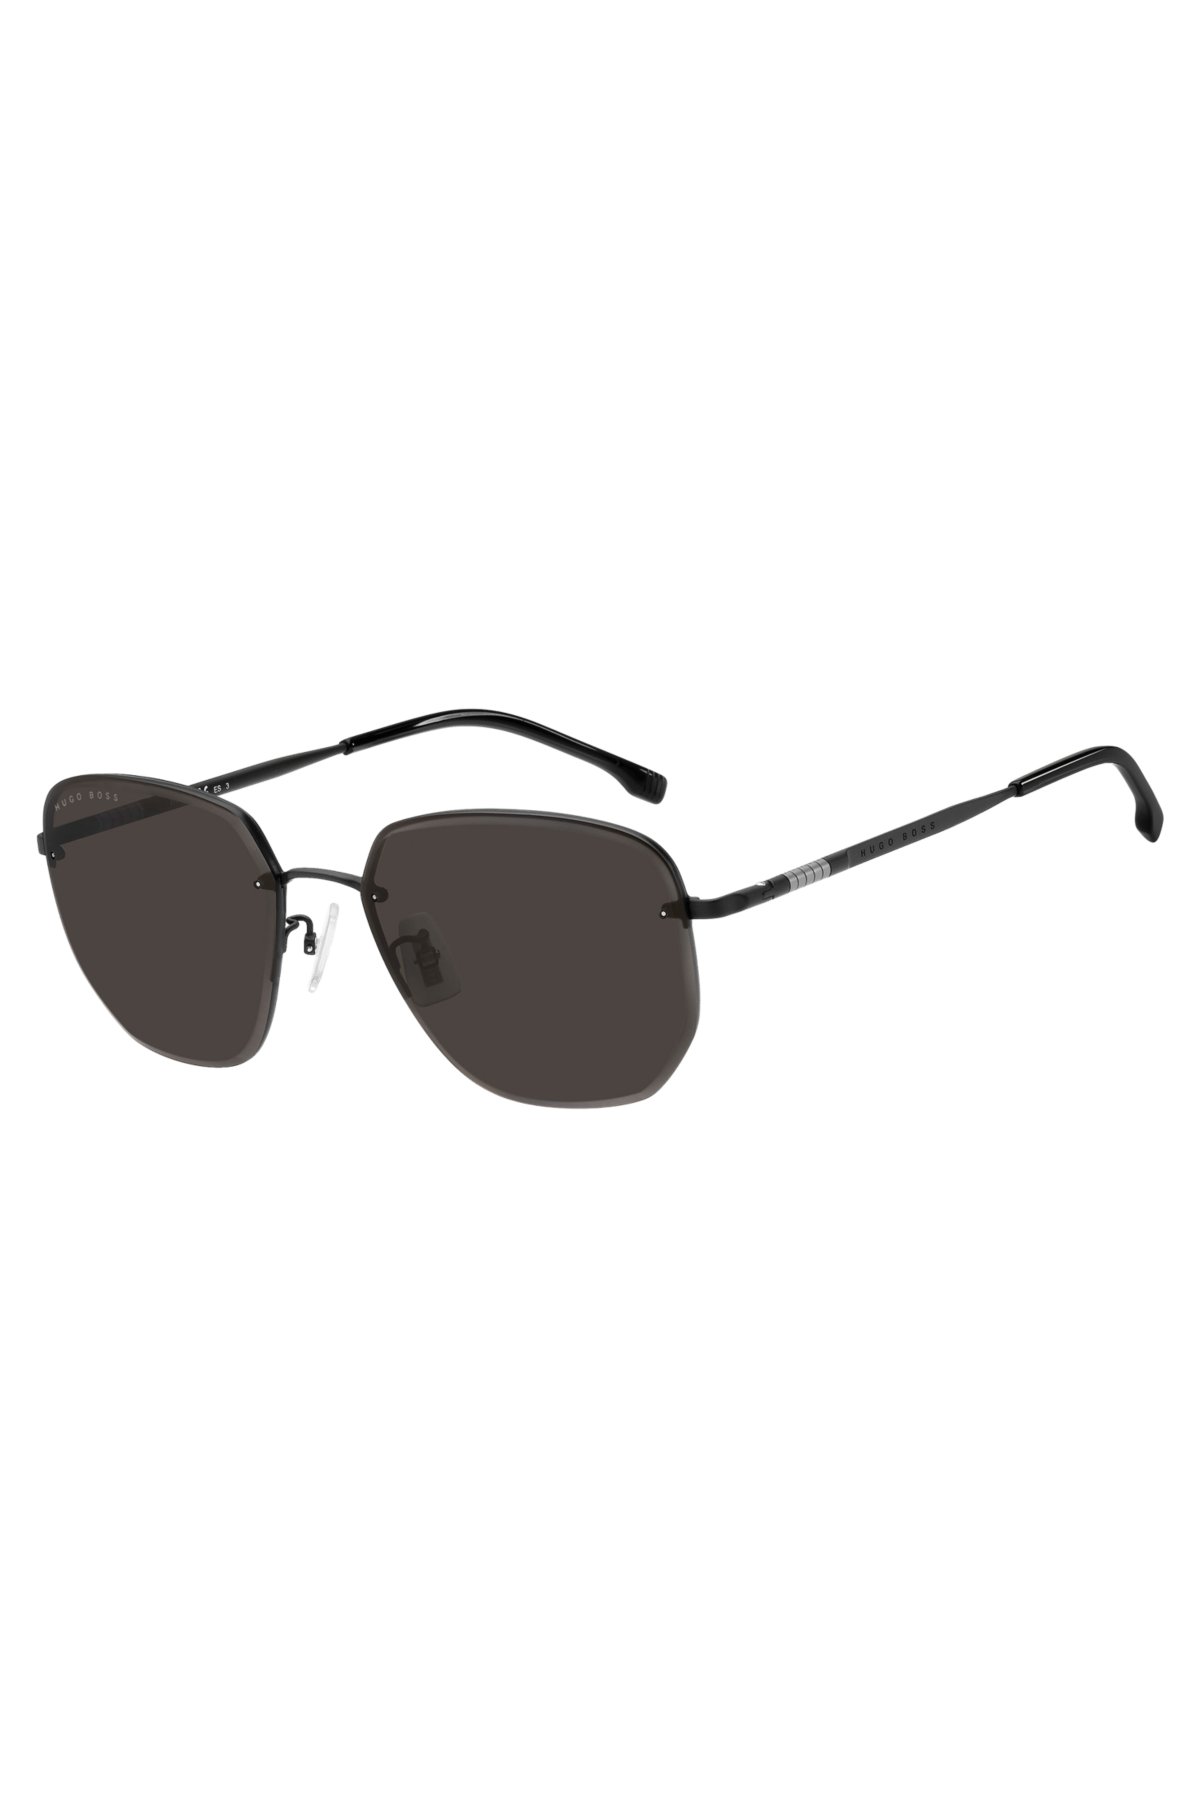 Vervagen huilen nikkel BOSS - Half-rim sunglasses in black titanium and metal